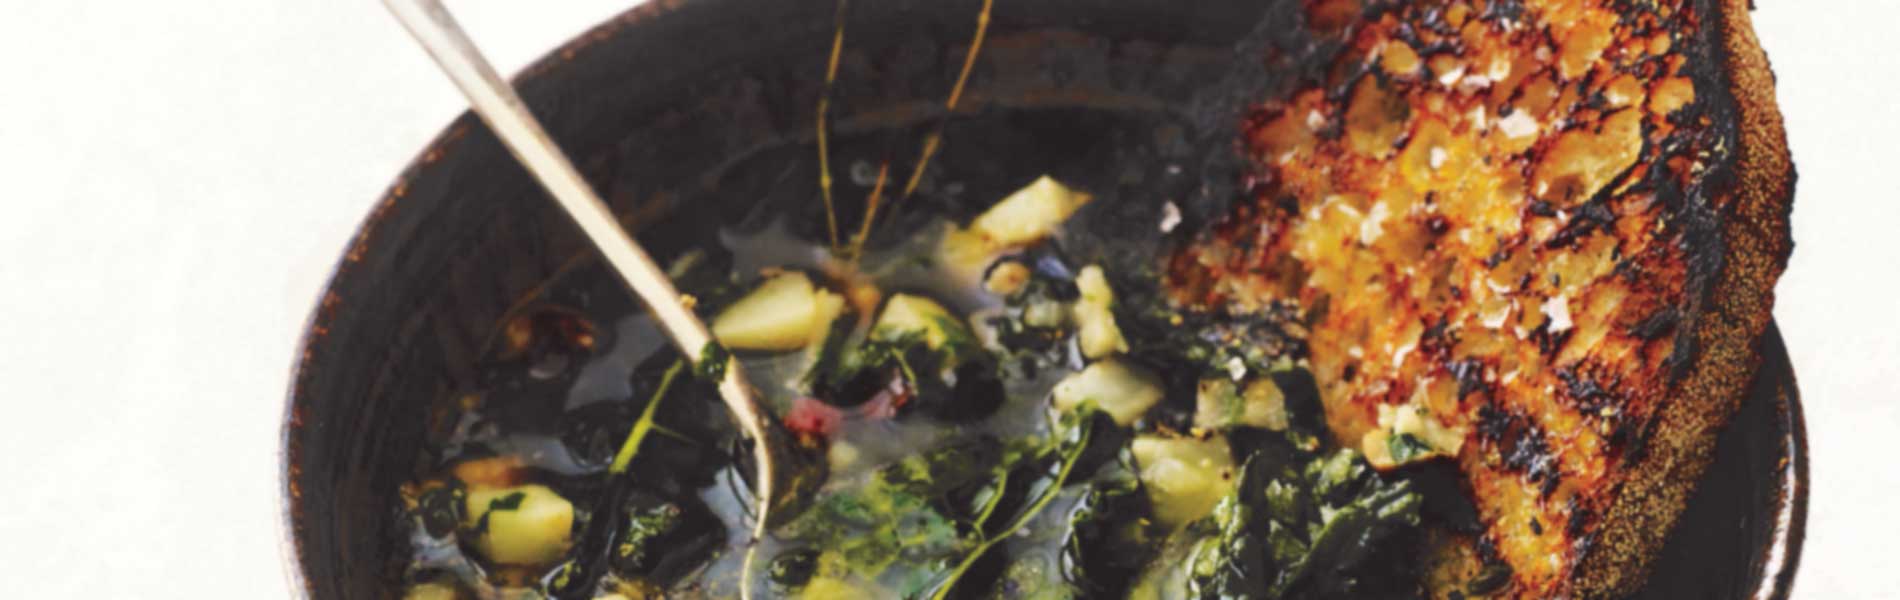 Gill Meller: Cobnut & Celeriac Soup with Kale, Parsley & Olive Oil